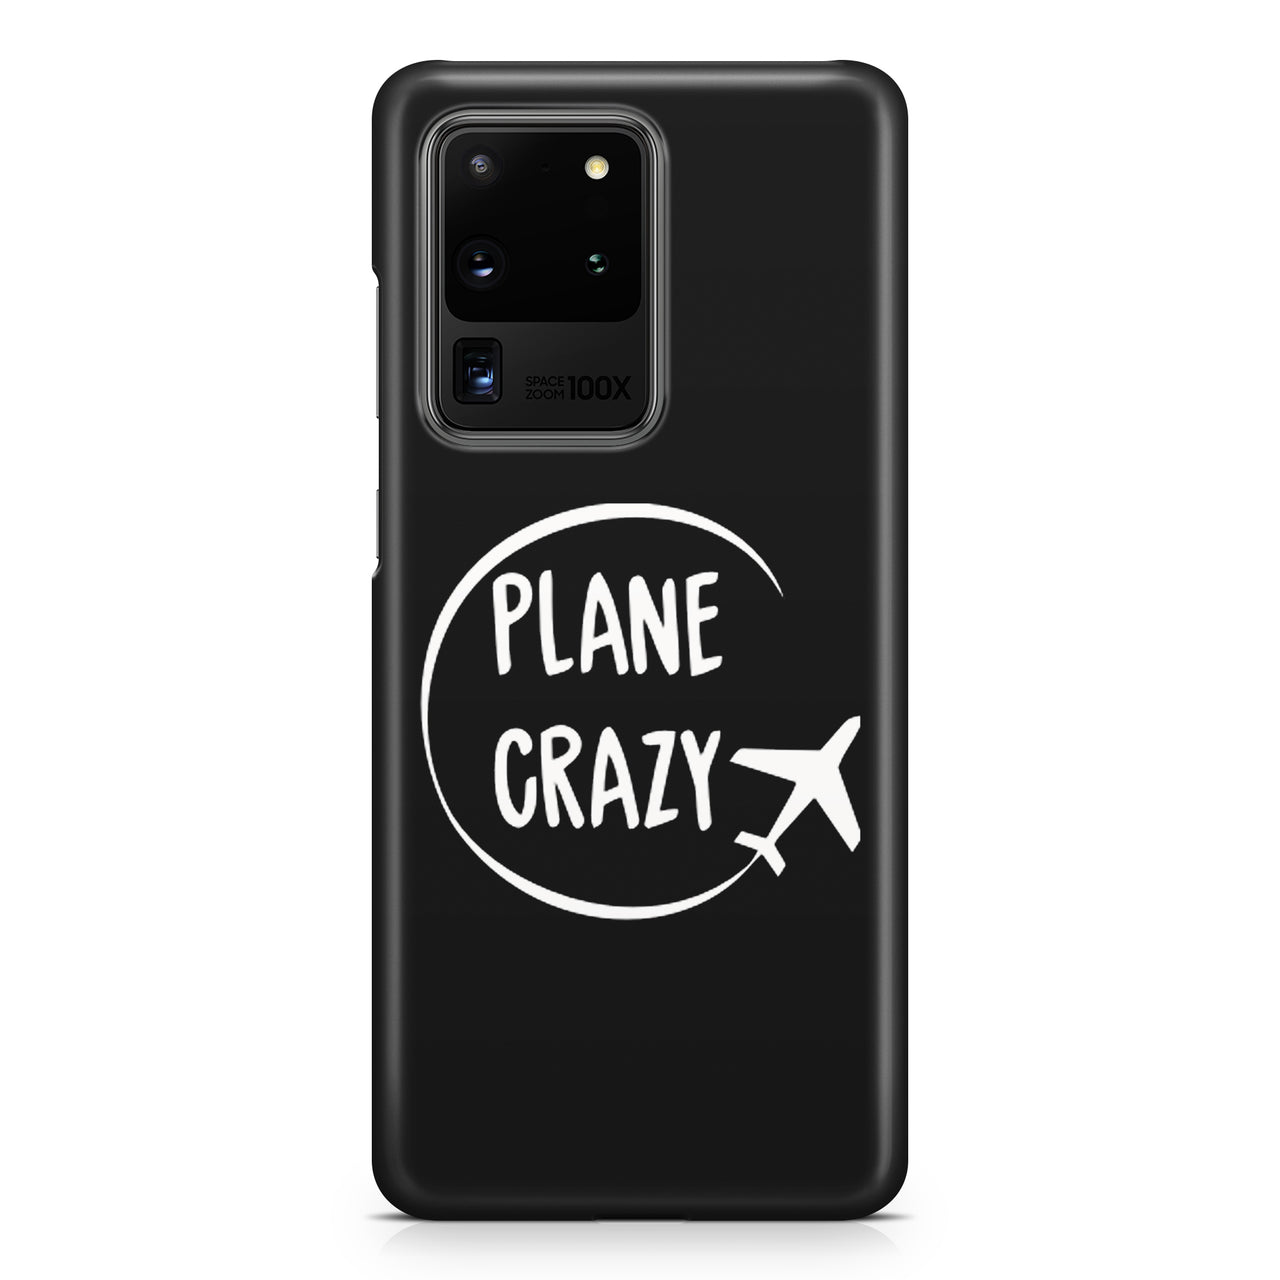 Plane Crazy Samsung S & Note Cases